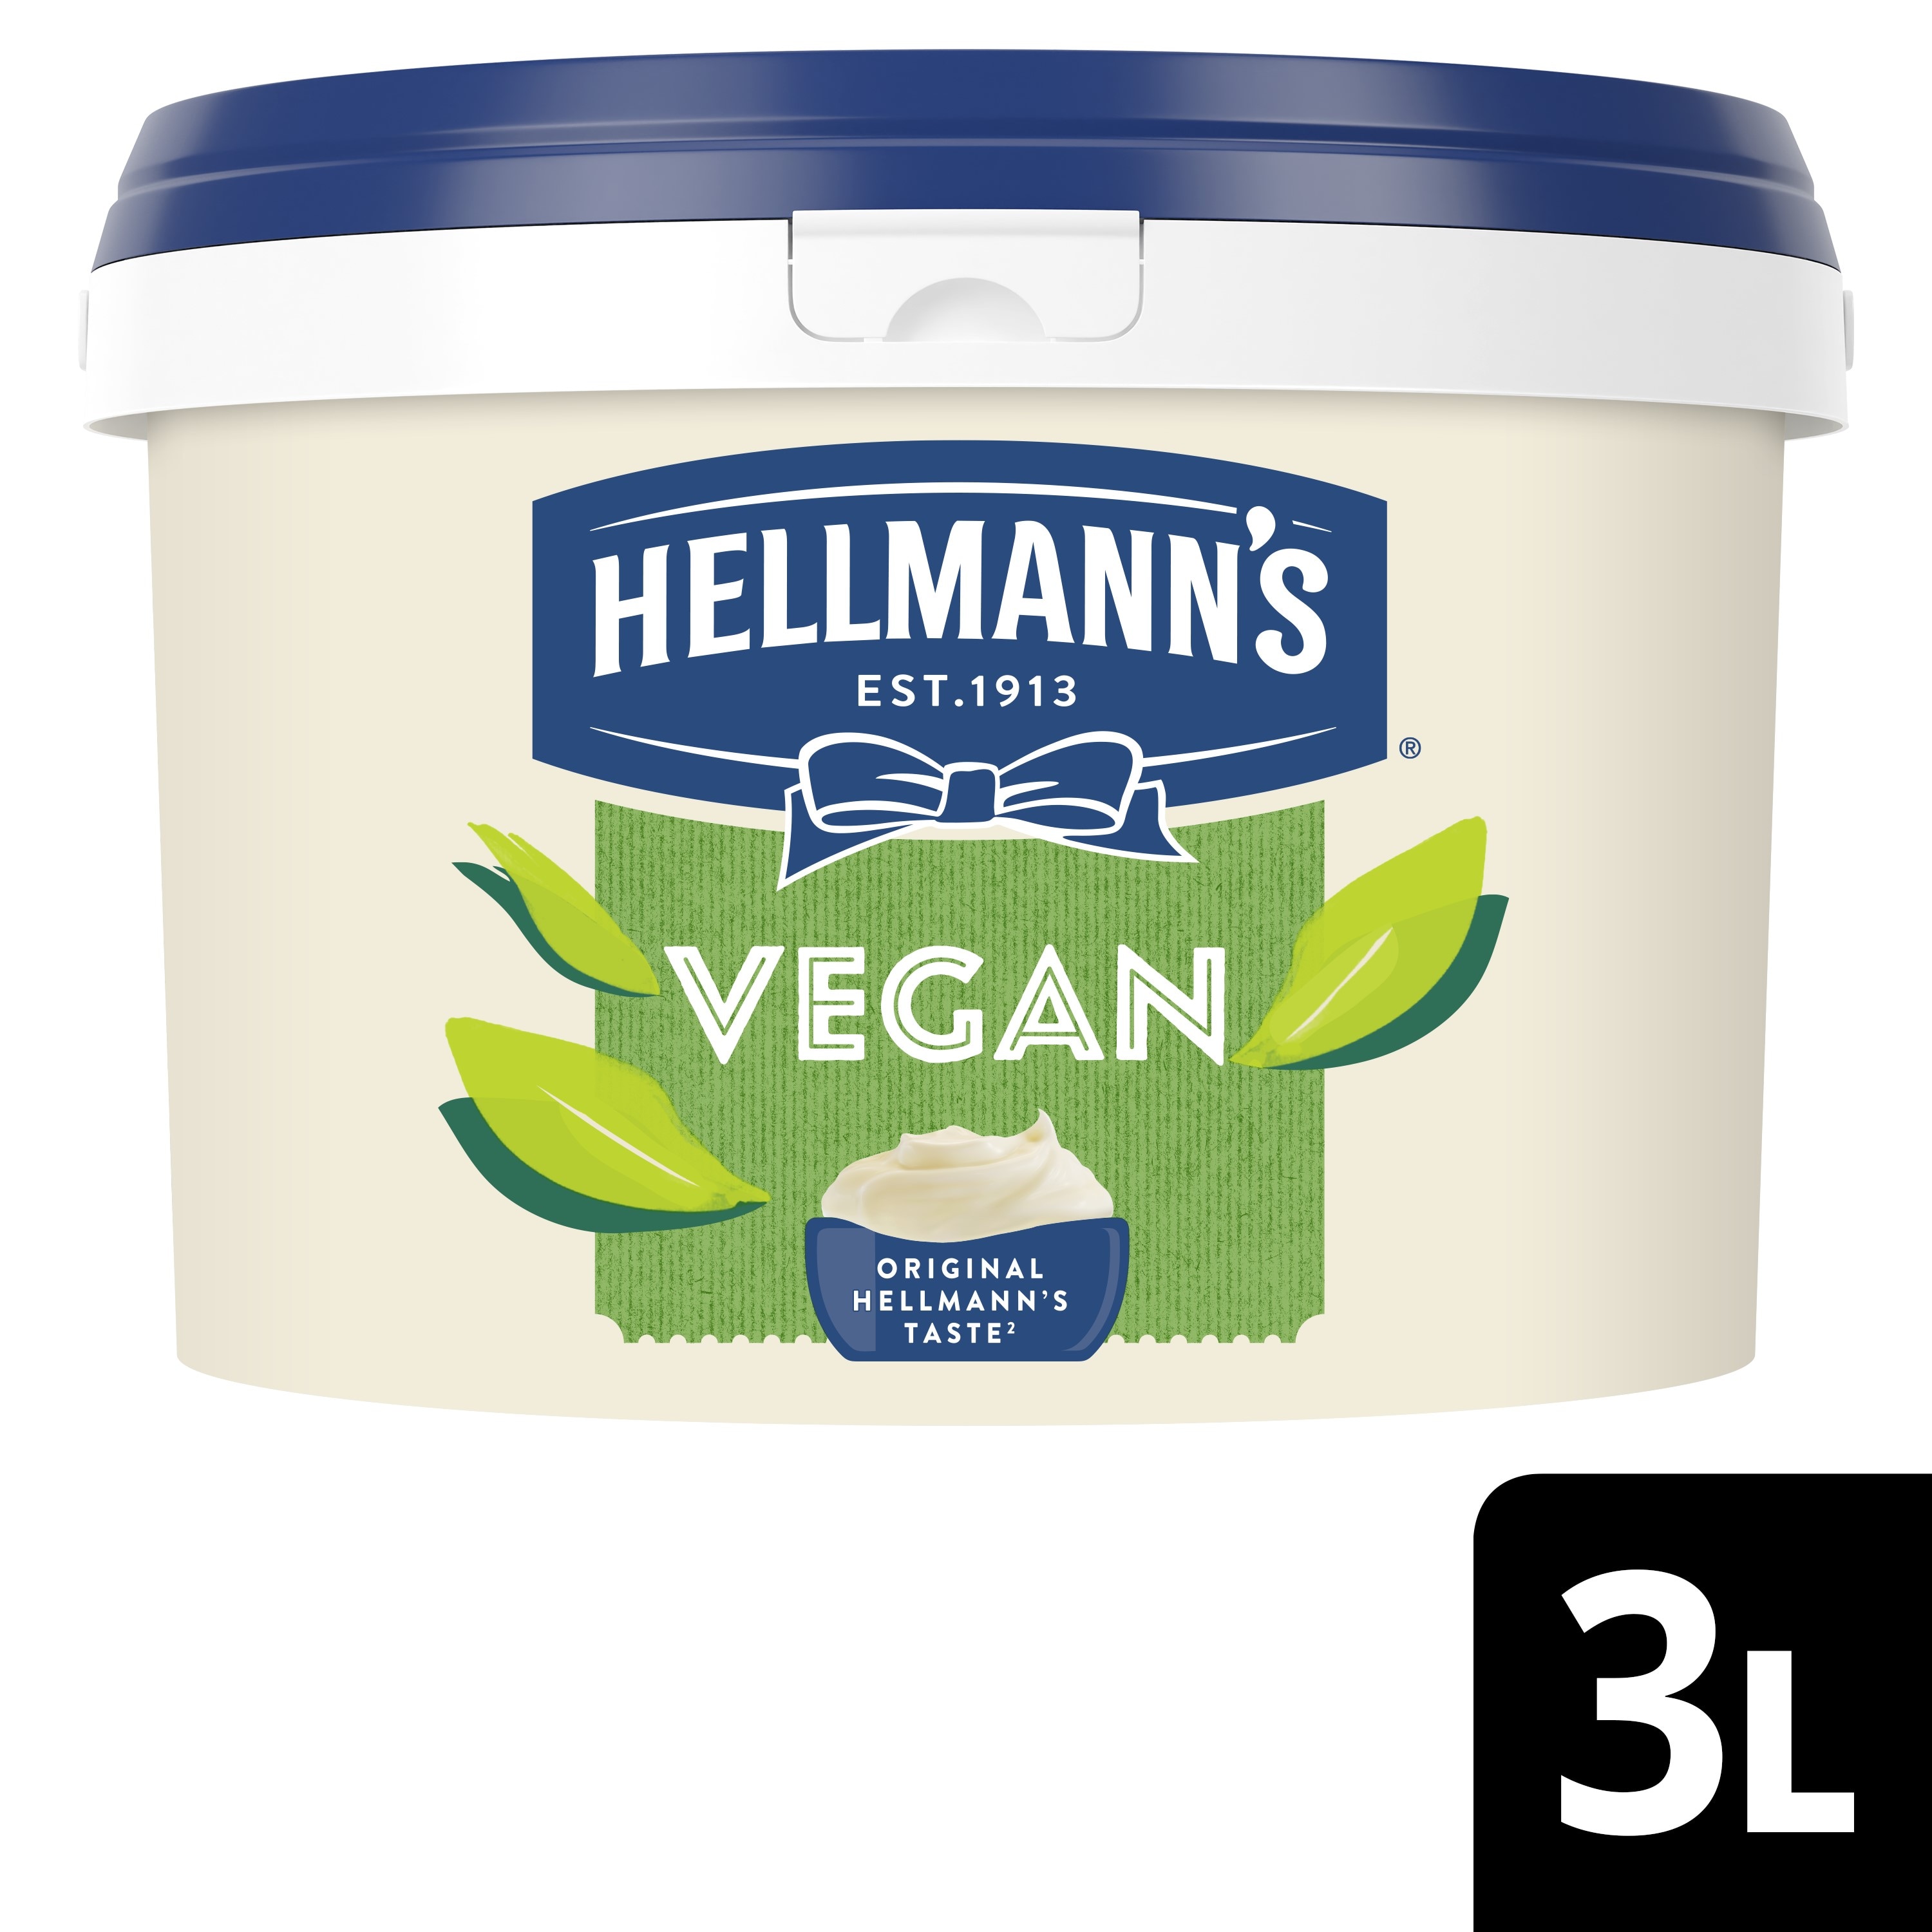 Hellmann's Vegan 3L - 